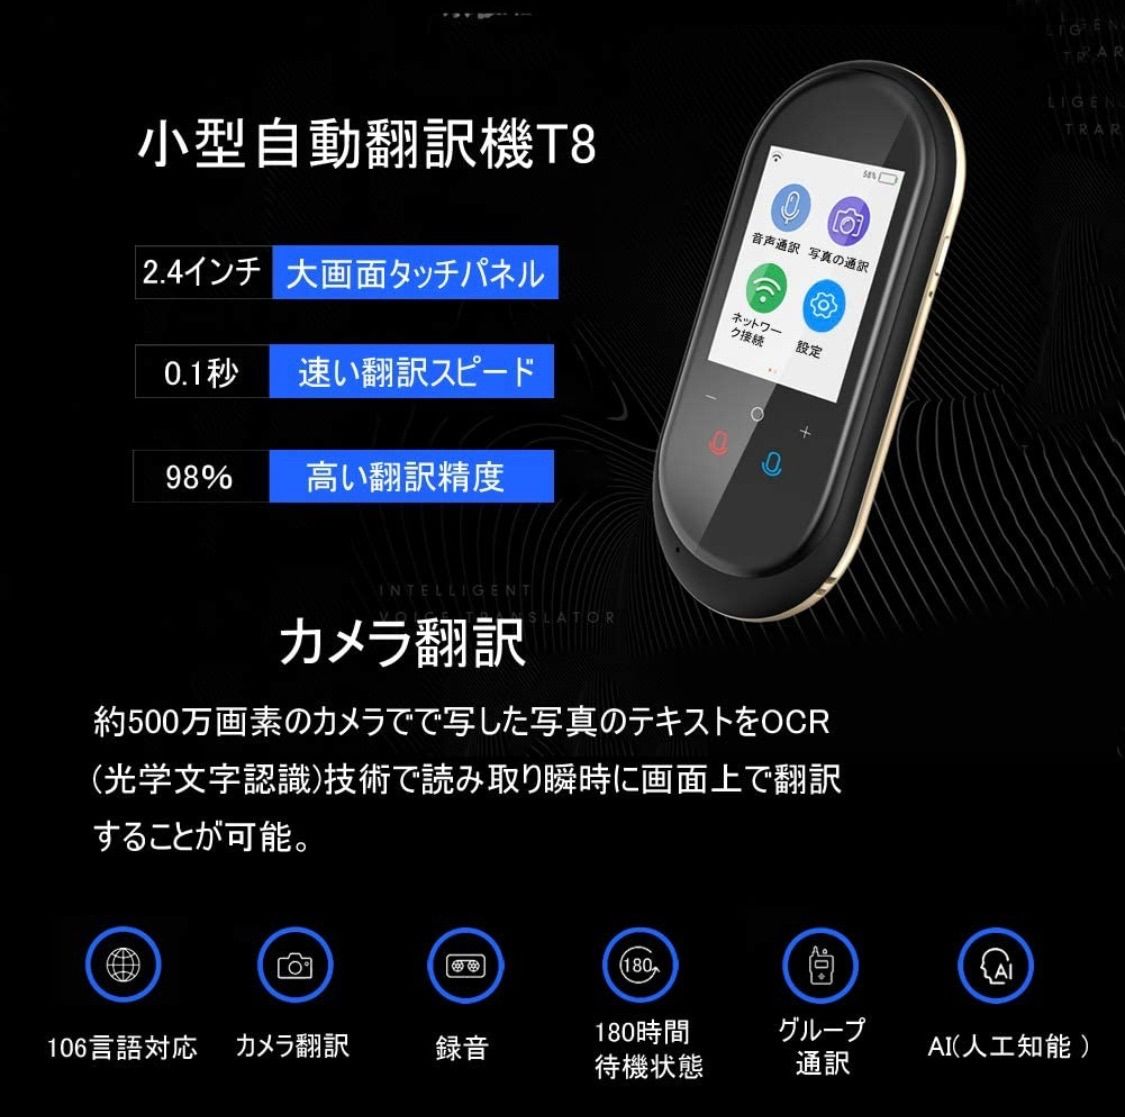 【♥️定価14500円♥️】小型 翻訳機 WiFi対応 自動 多言語 黒 旅行